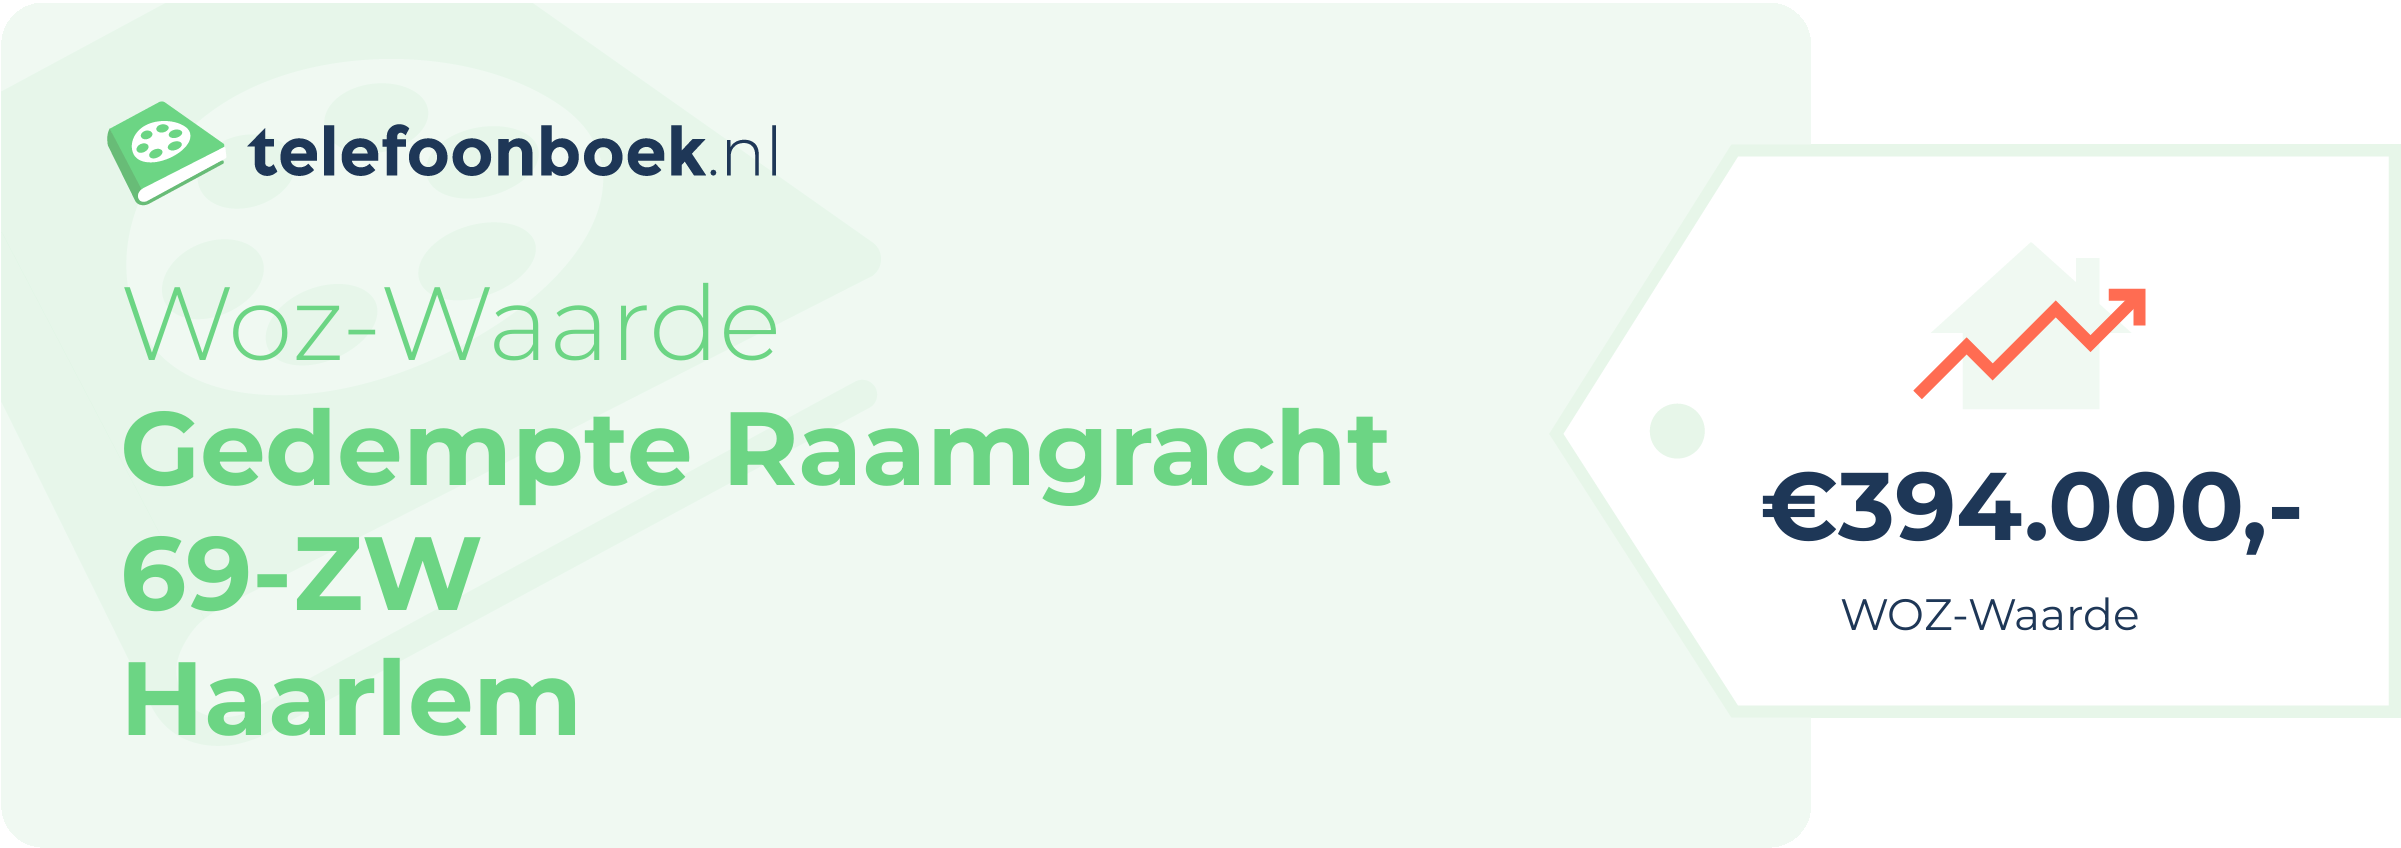 WOZ-waarde Gedempte Raamgracht 69-ZW Haarlem